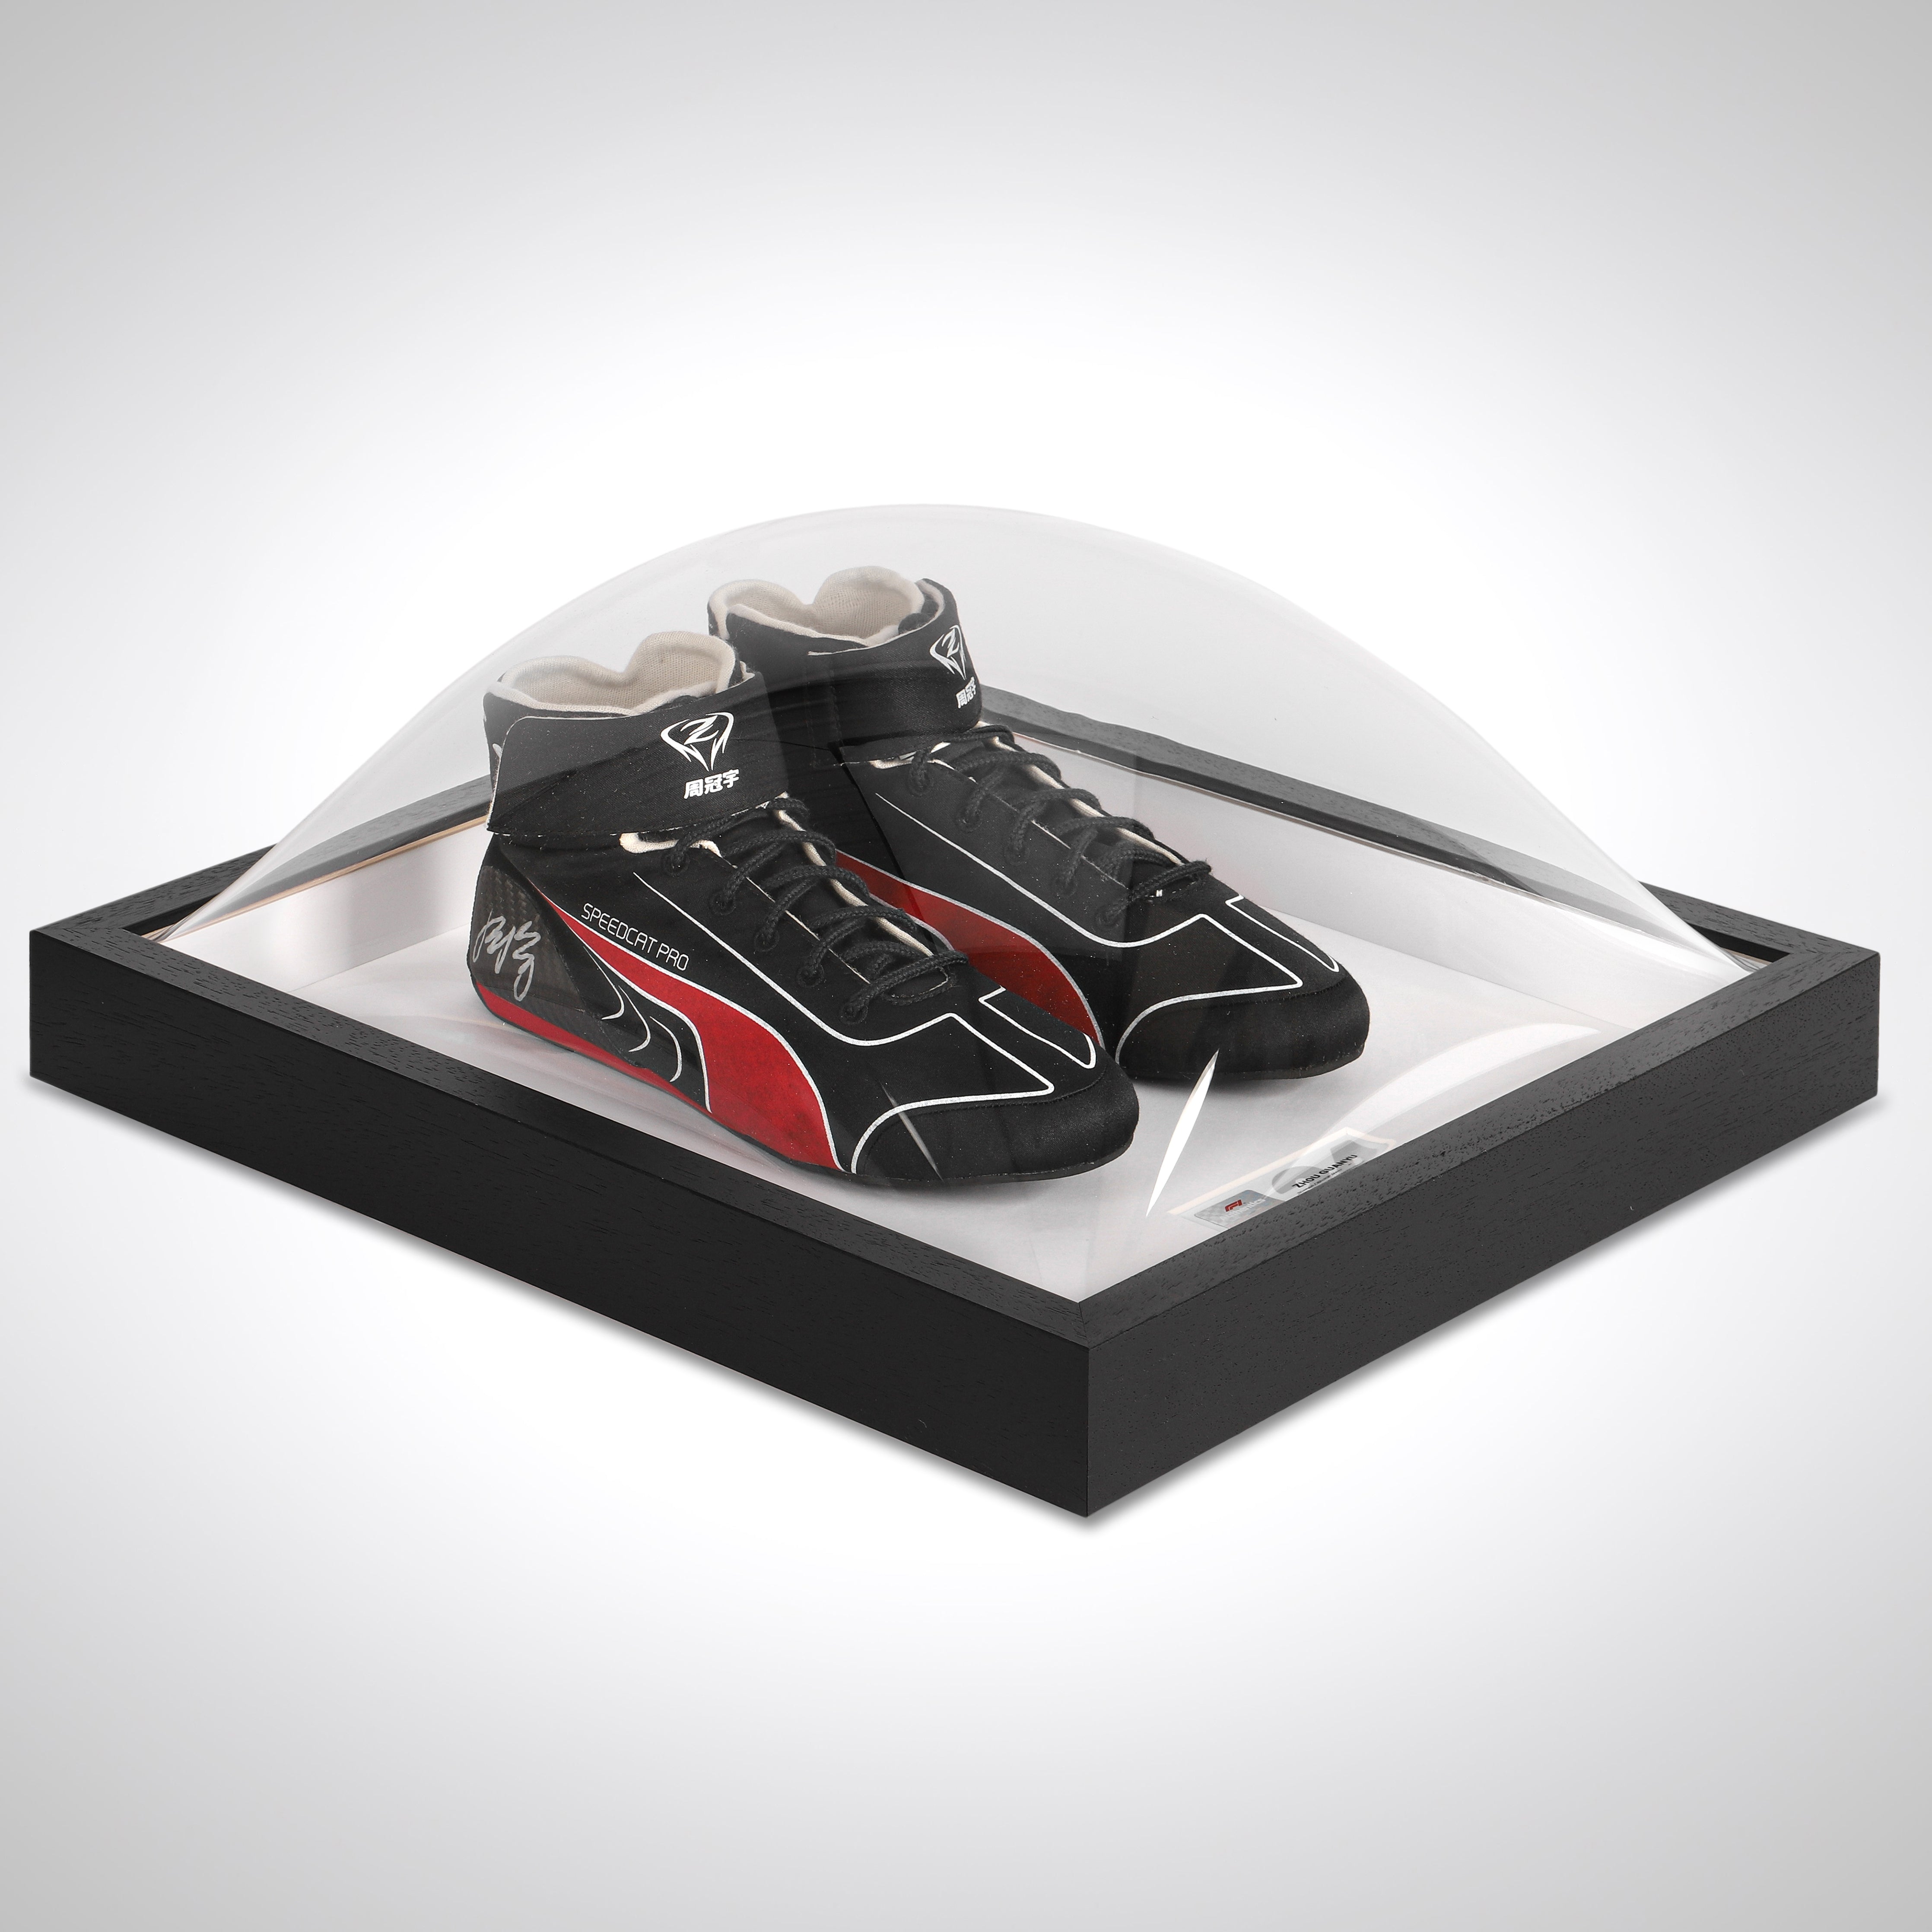 Zhou Guanyu 2022 Signed Replica Alfa Romeo F1 Team ORLEN Race Boots